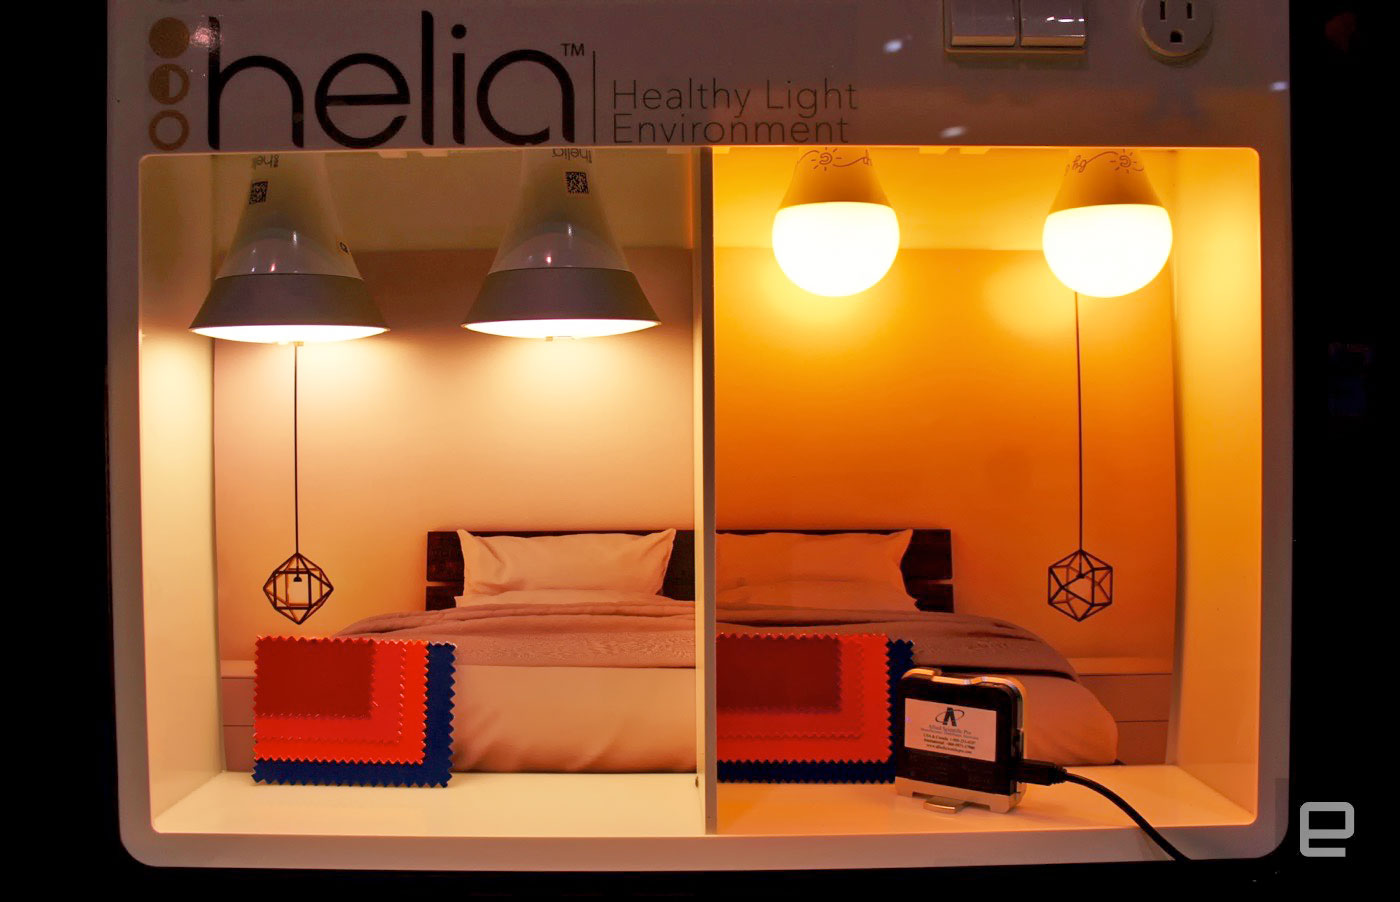 Helia bulbs cut blue light to help you sleep at night